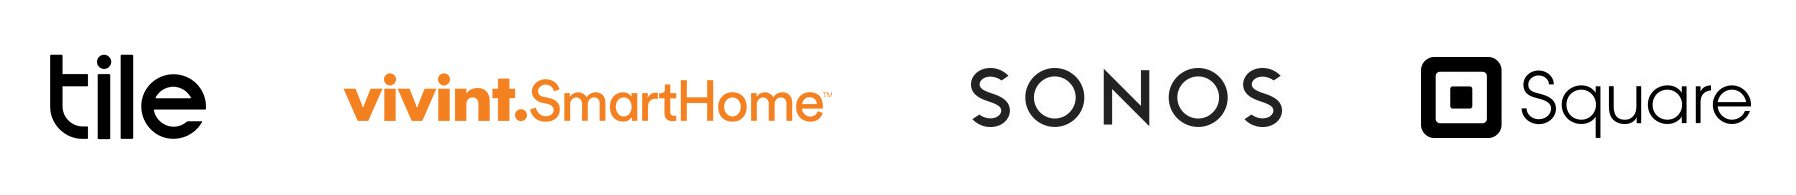 Logotipos de clientes: tile, Vivint Smart Home, Sonos y Square